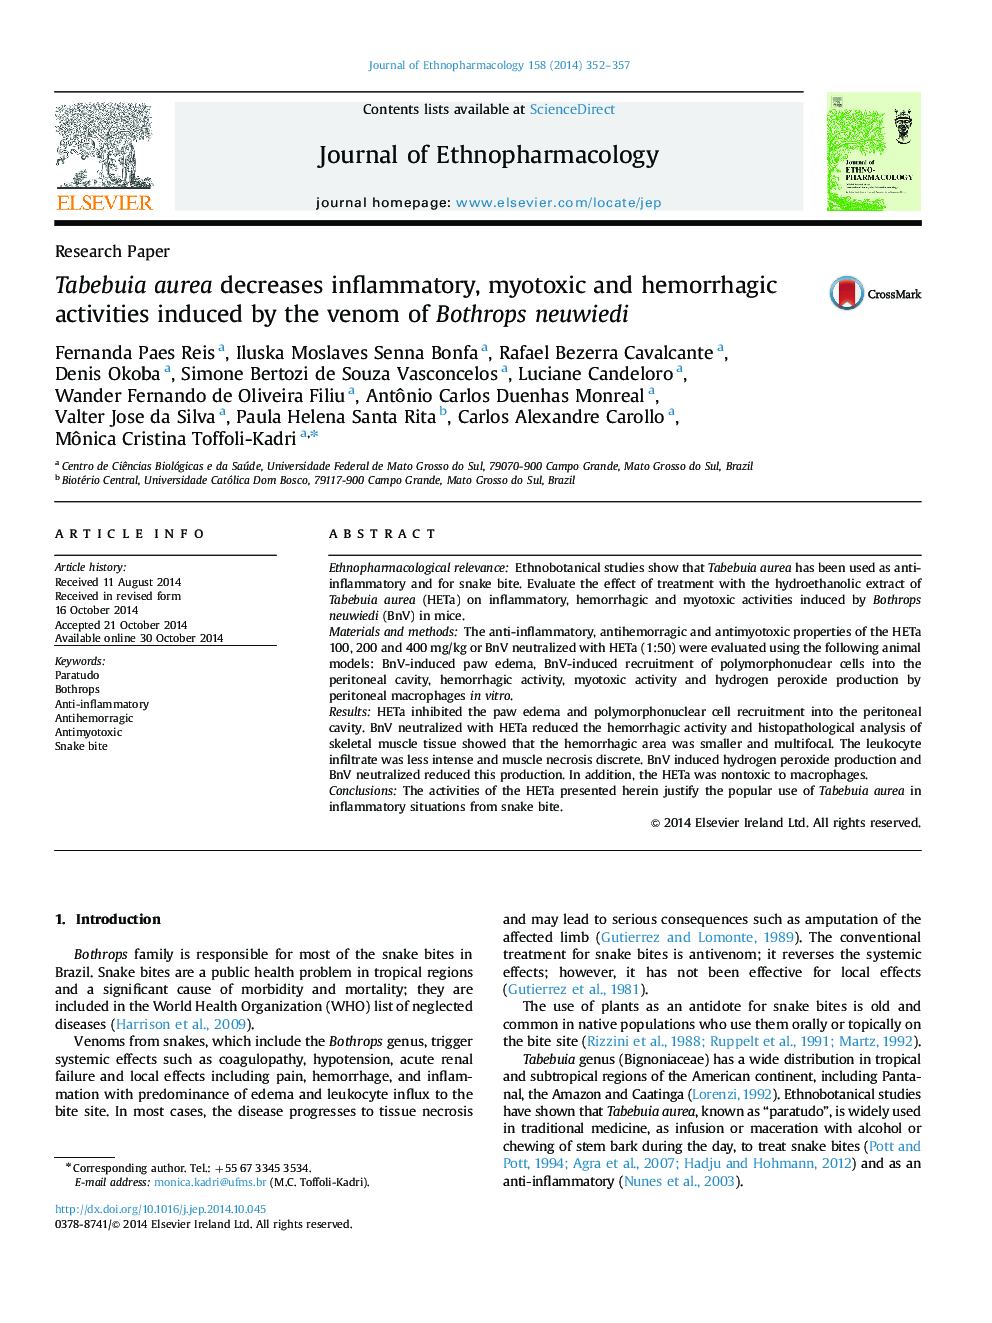 Research PaperTabebuia aurea decreases inflammatory, myotoxic and hemorrhagic activities induced by the venom of Bothrops neuwiedi